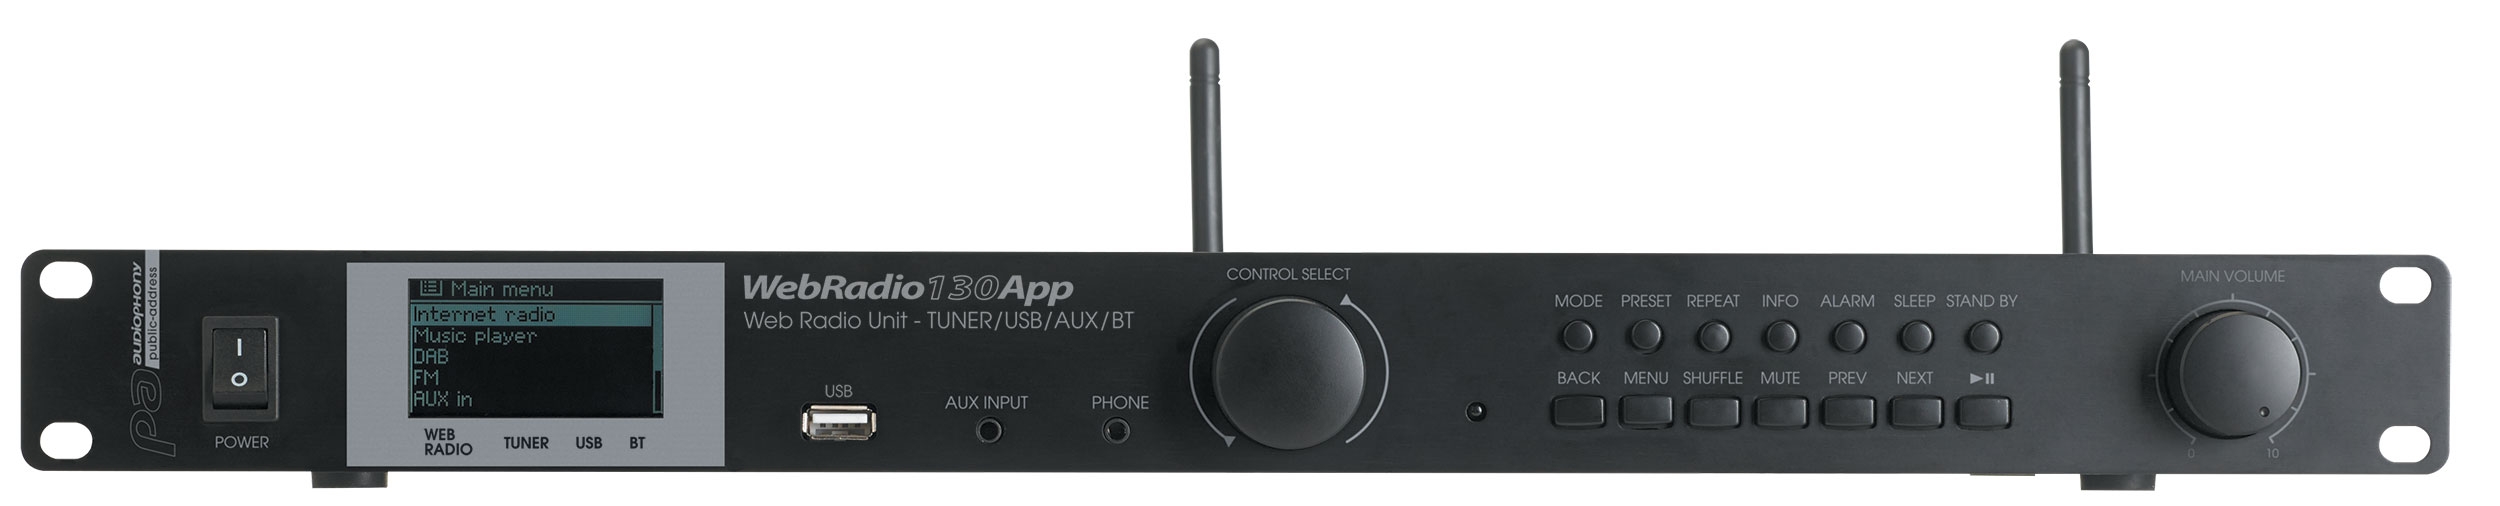 Online multimedia player: Internet radio, DAB, FM, media player, AUX, Bluetooth, APP and remote control